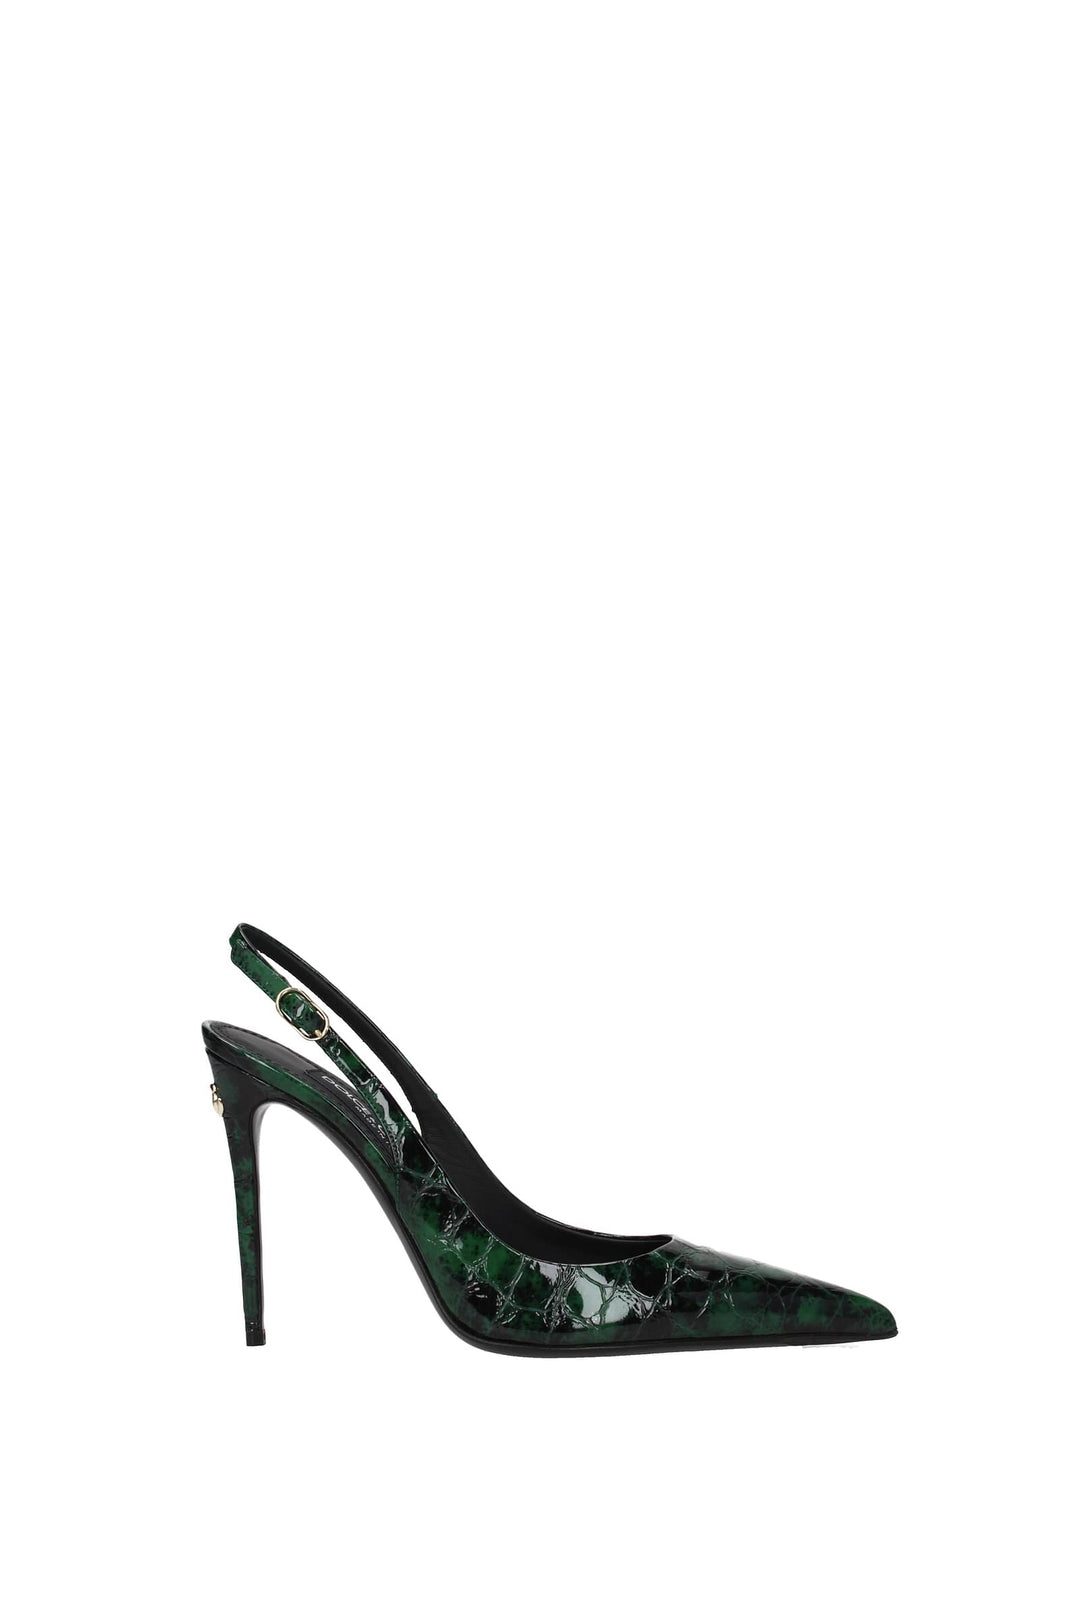 Sandali Vernice Verde Smeraldo - Dolce&Gabbana - Donna